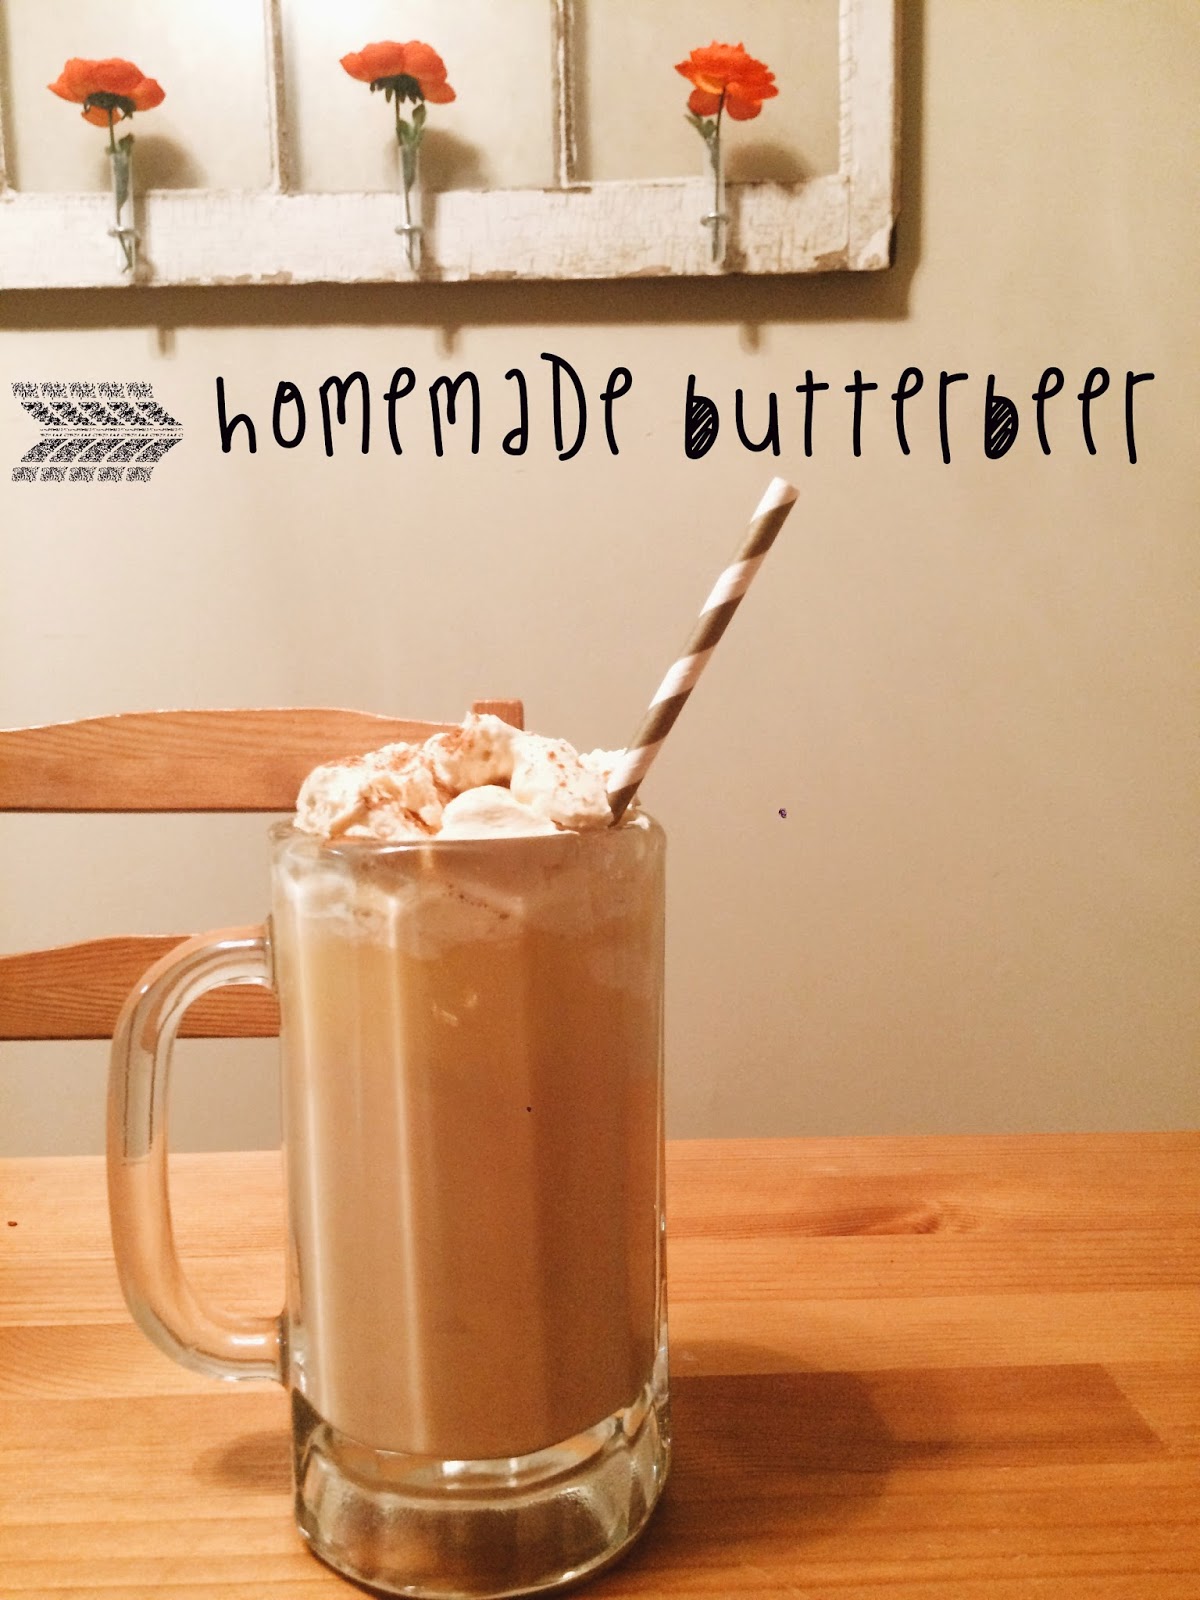 girl gone wife: homemade butterbeer